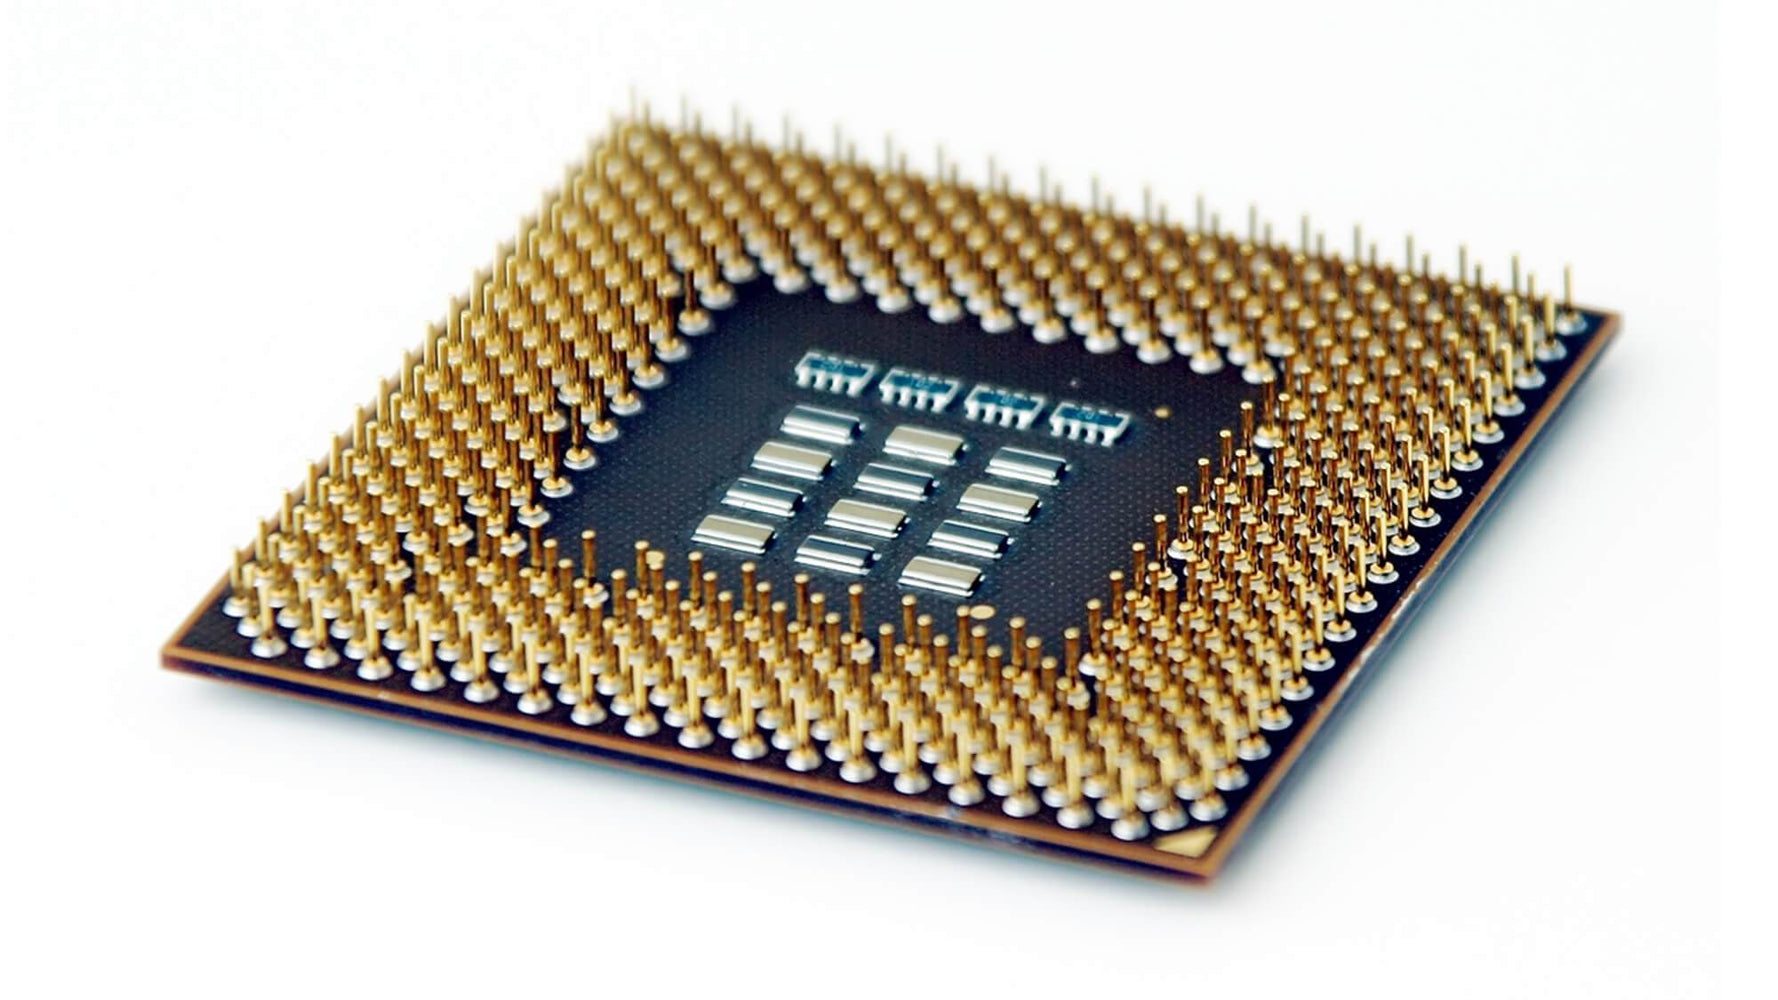 BX80605I5750 - Intel Core i5-750 Quad Core 2.66GHz 2.50GT/s DMI 8MB L3 Cache Socket LGA1156 Desktop Processor